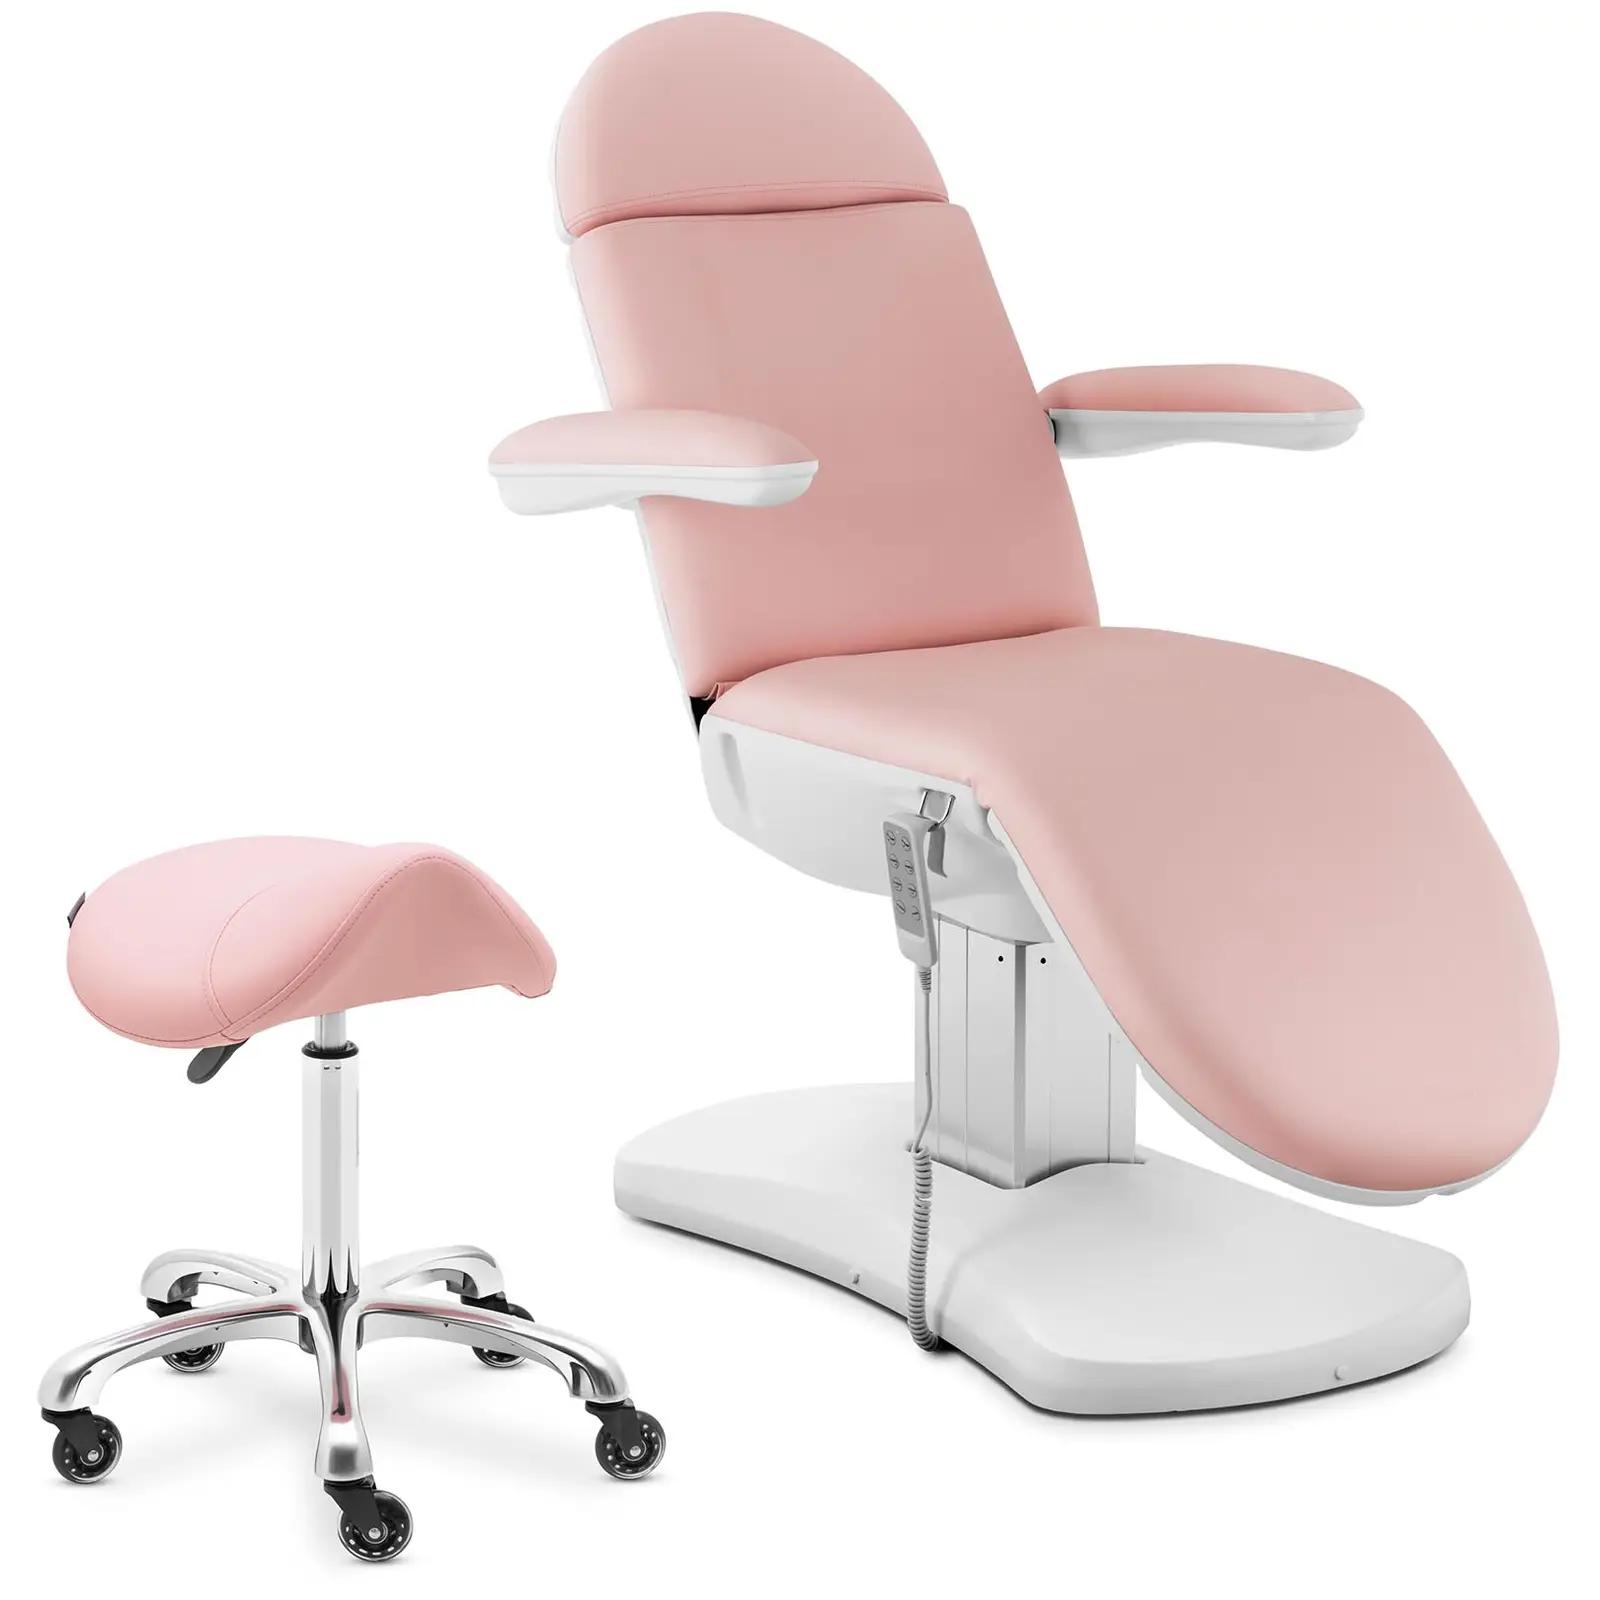 Cadeira de cosmética e cadeira de selim - cor-de-rosa, branco